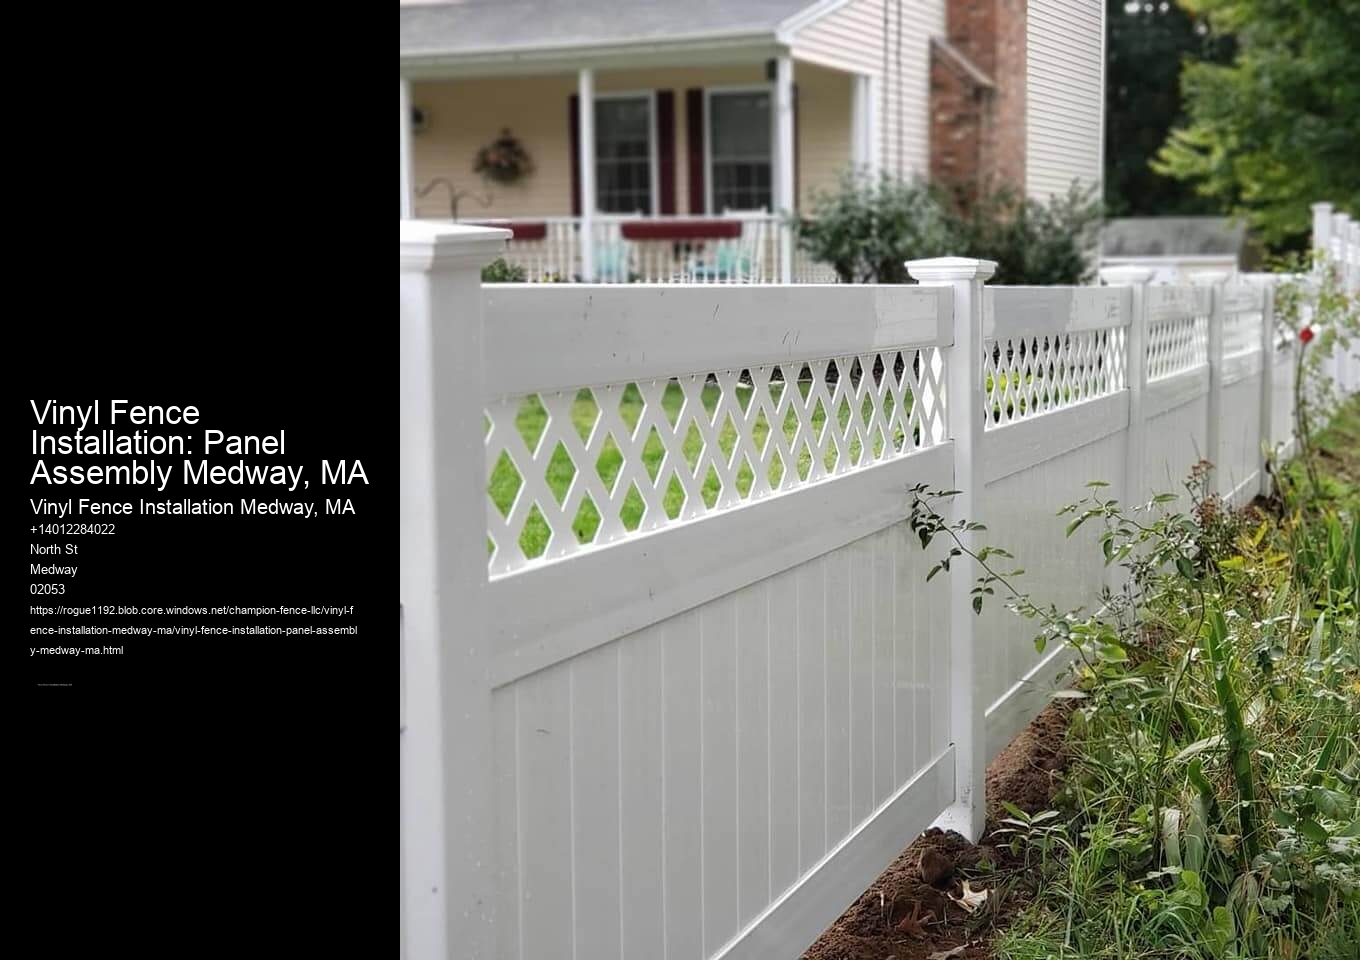 Vinyl Fence Installation: Panel Assembly Medway, MA